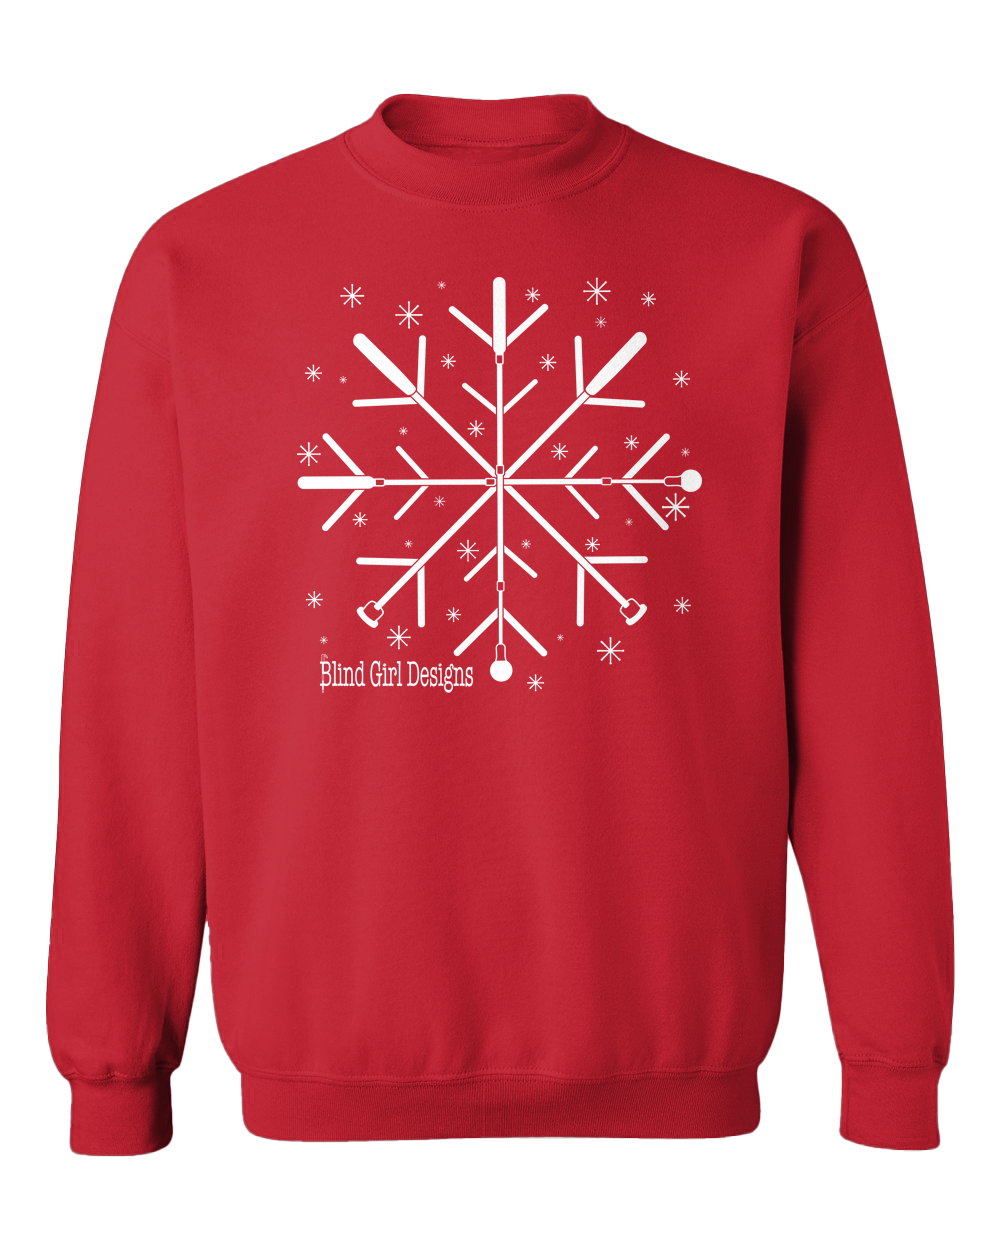 New 3D! Super Tactile Snowflake White Cane Crew Sweatshirt - vibrant red